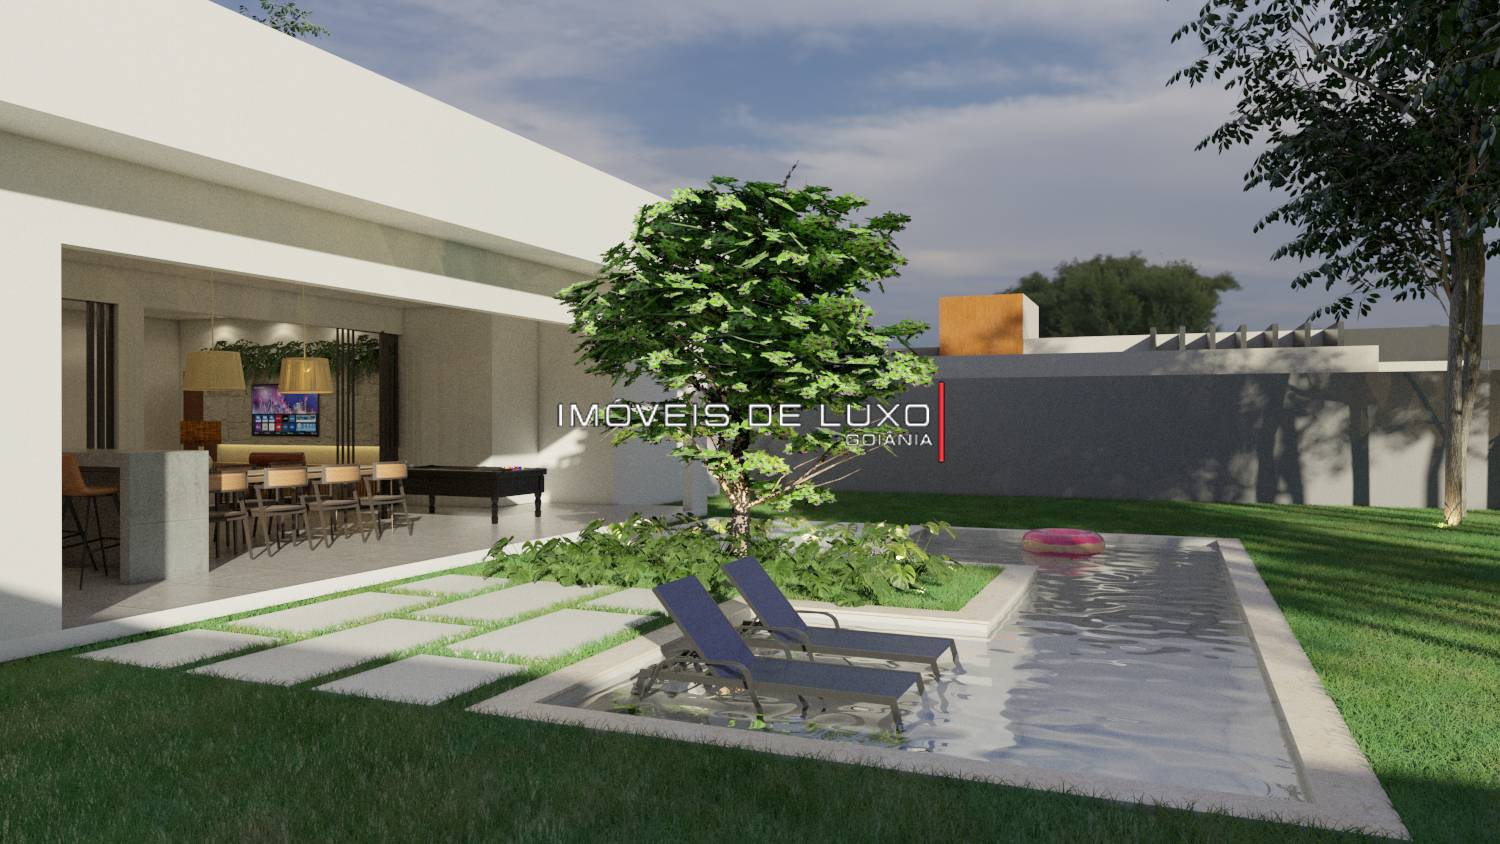 Imóveis de Luxo - Casa térrea com 3 suítes plenas, paisagismo lindo!! Cond Villa Verde